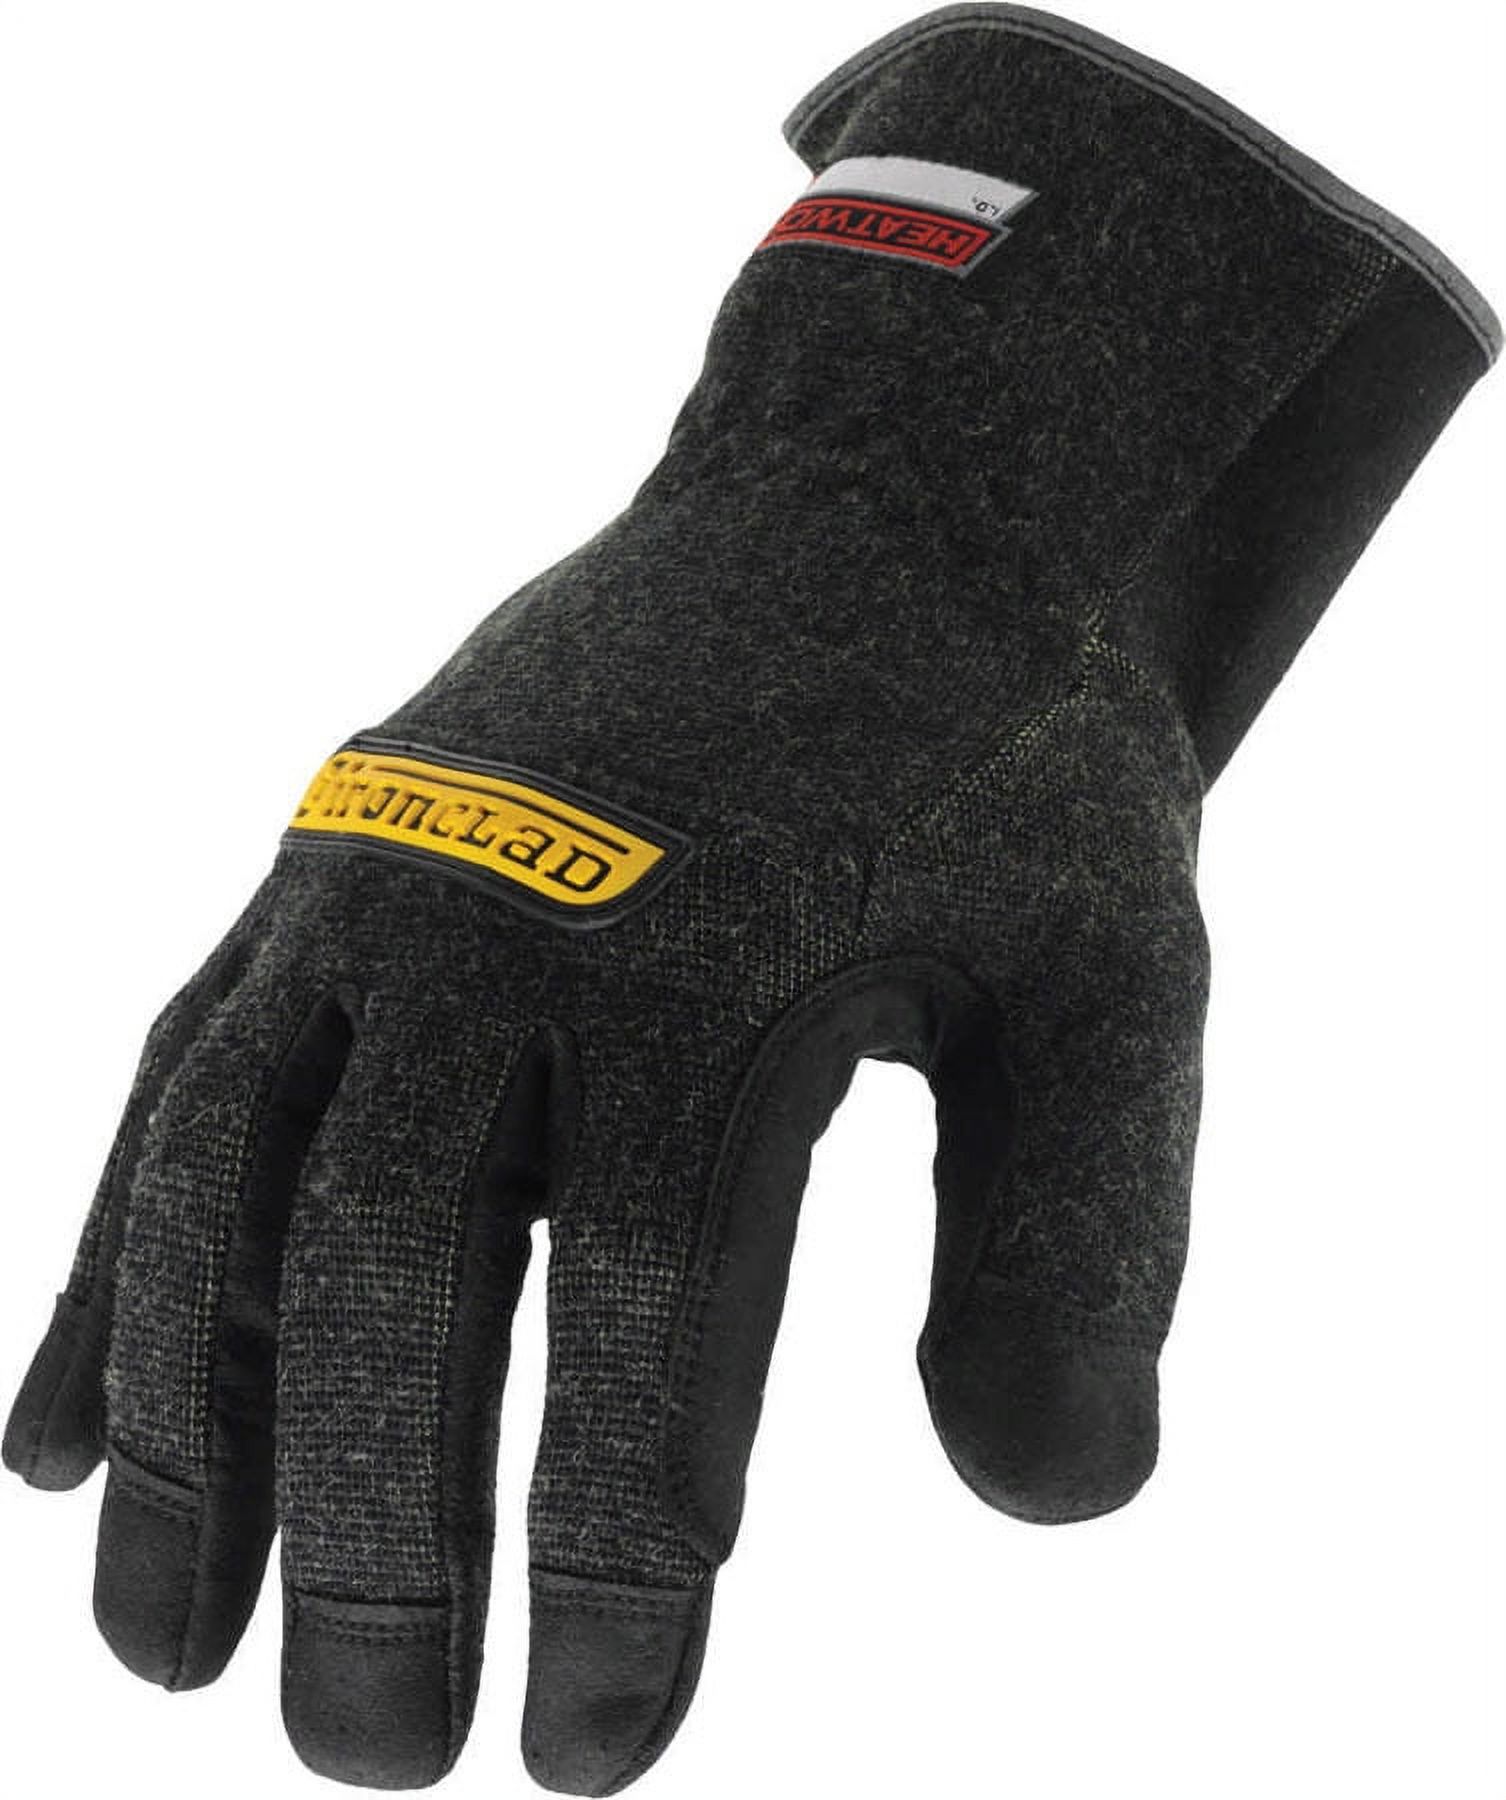 Ironclad Heatworx Glove Medium Reinforced - image 1 of 3